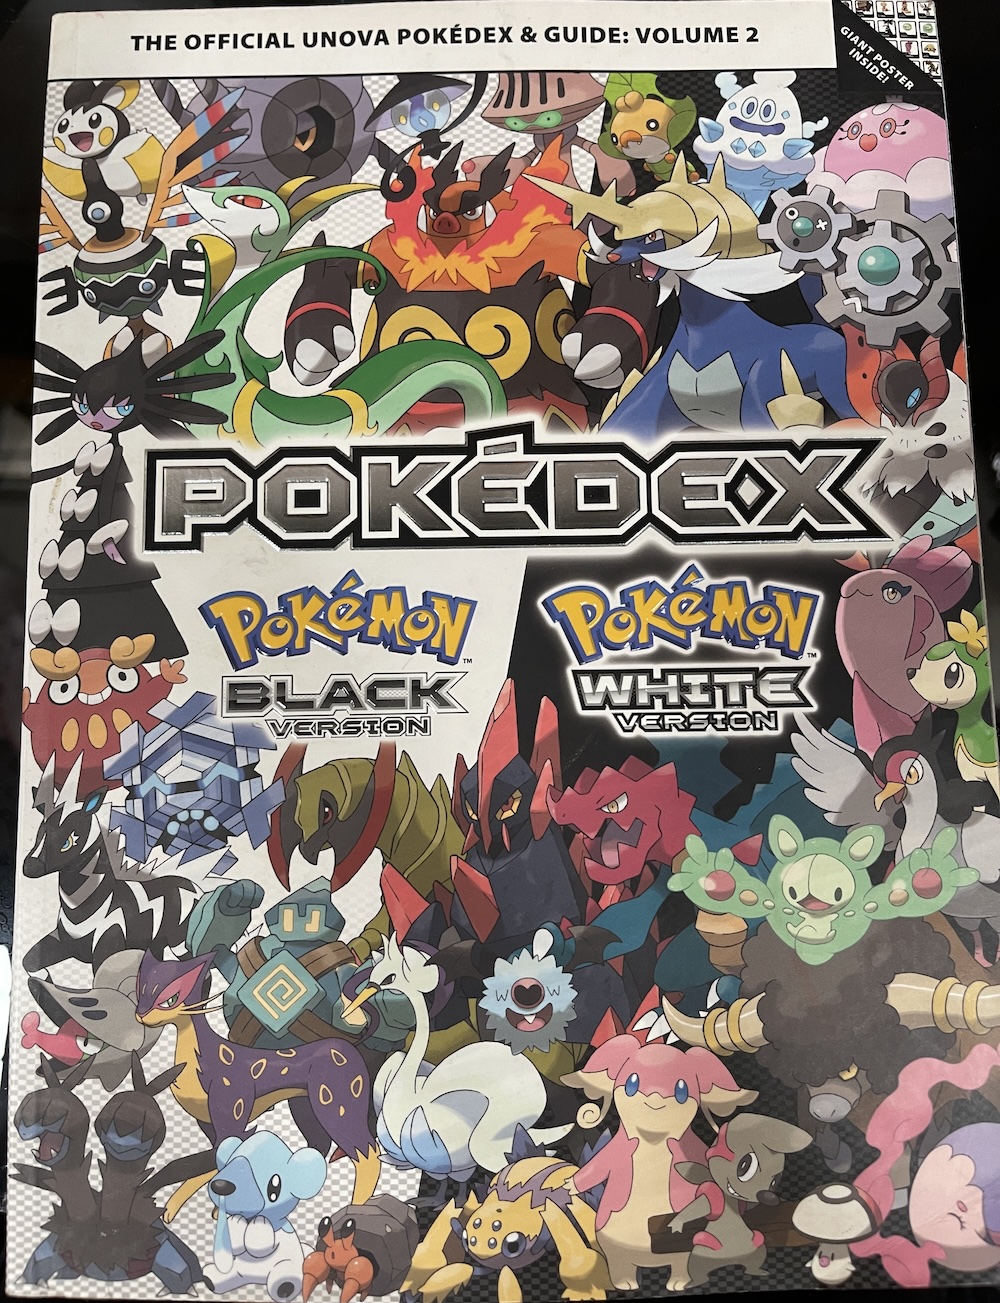 Pokemon Black & Pokemon White Versions Official National Pokedex